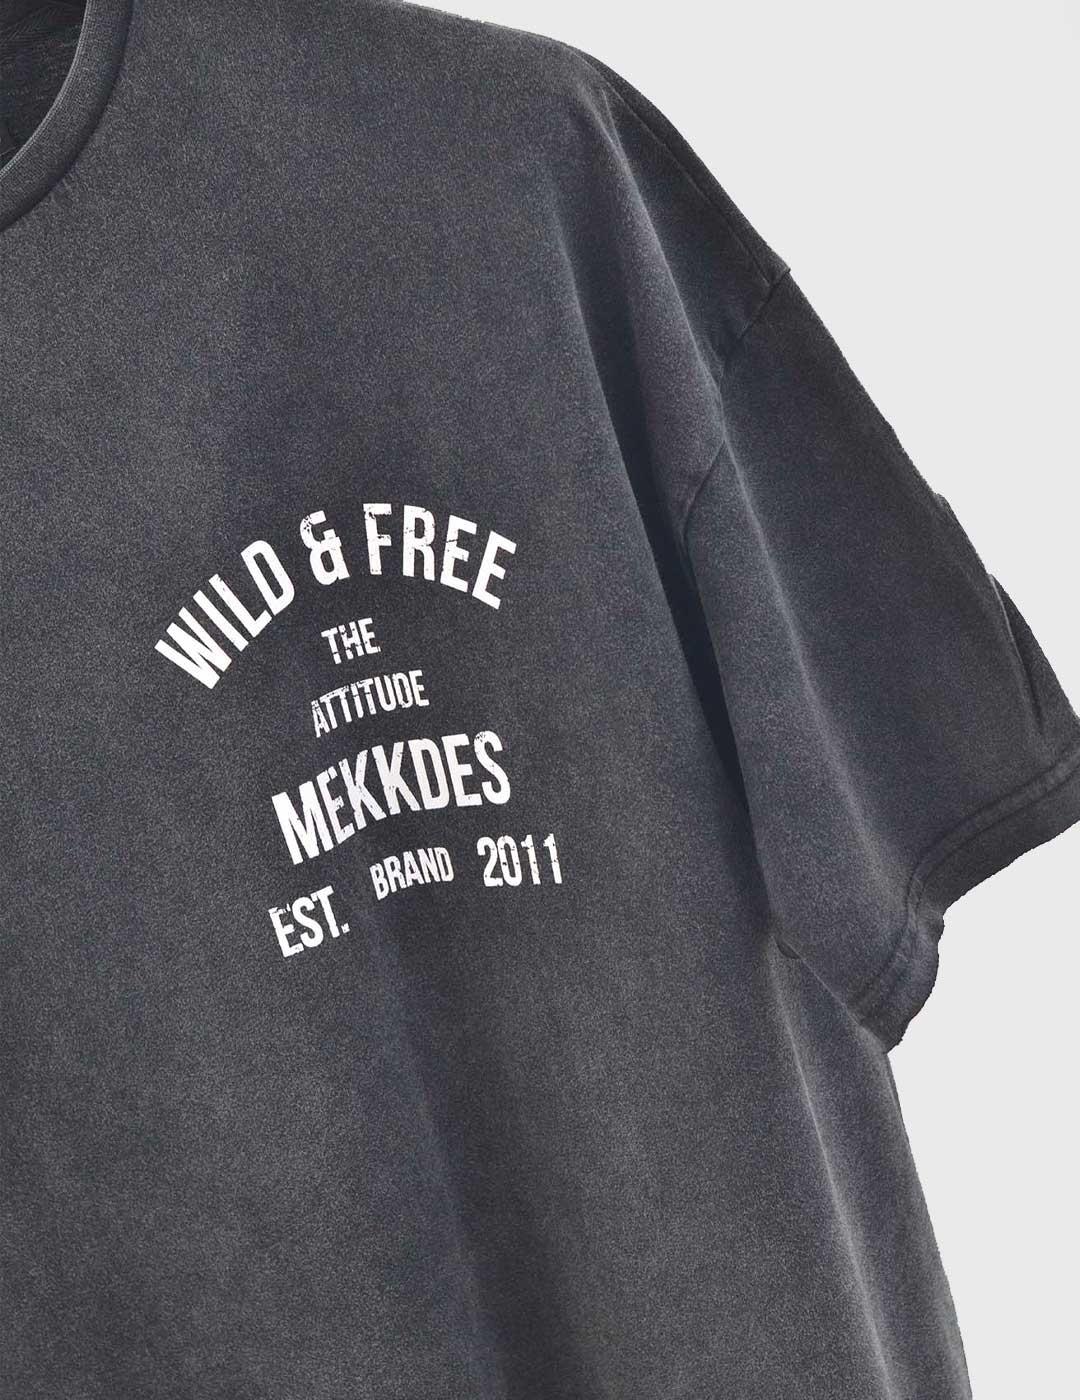 Camiseta Mekkdes Wild & Free negra para hombre